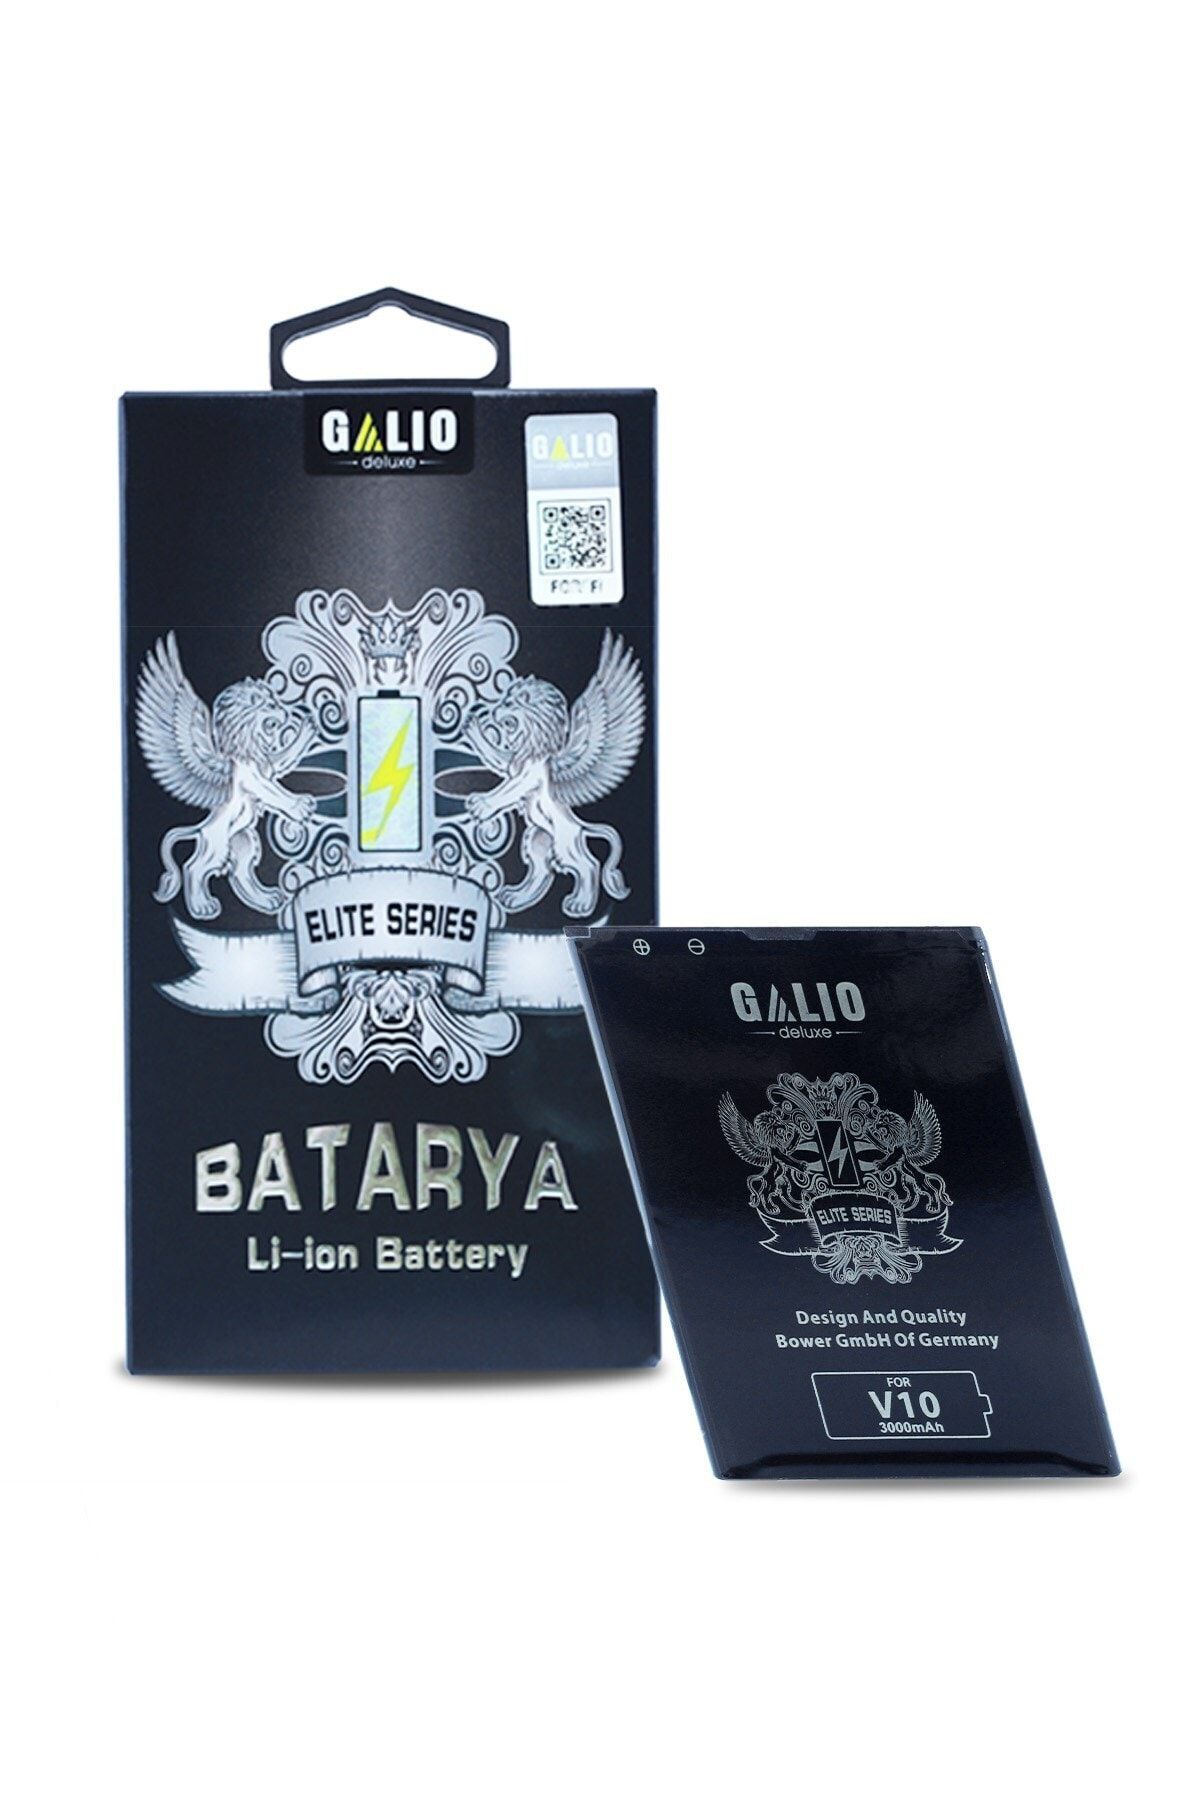 LG Galio V10 Batarya Pil Bl-45b1f 3000 Mah Aa++ Kalite